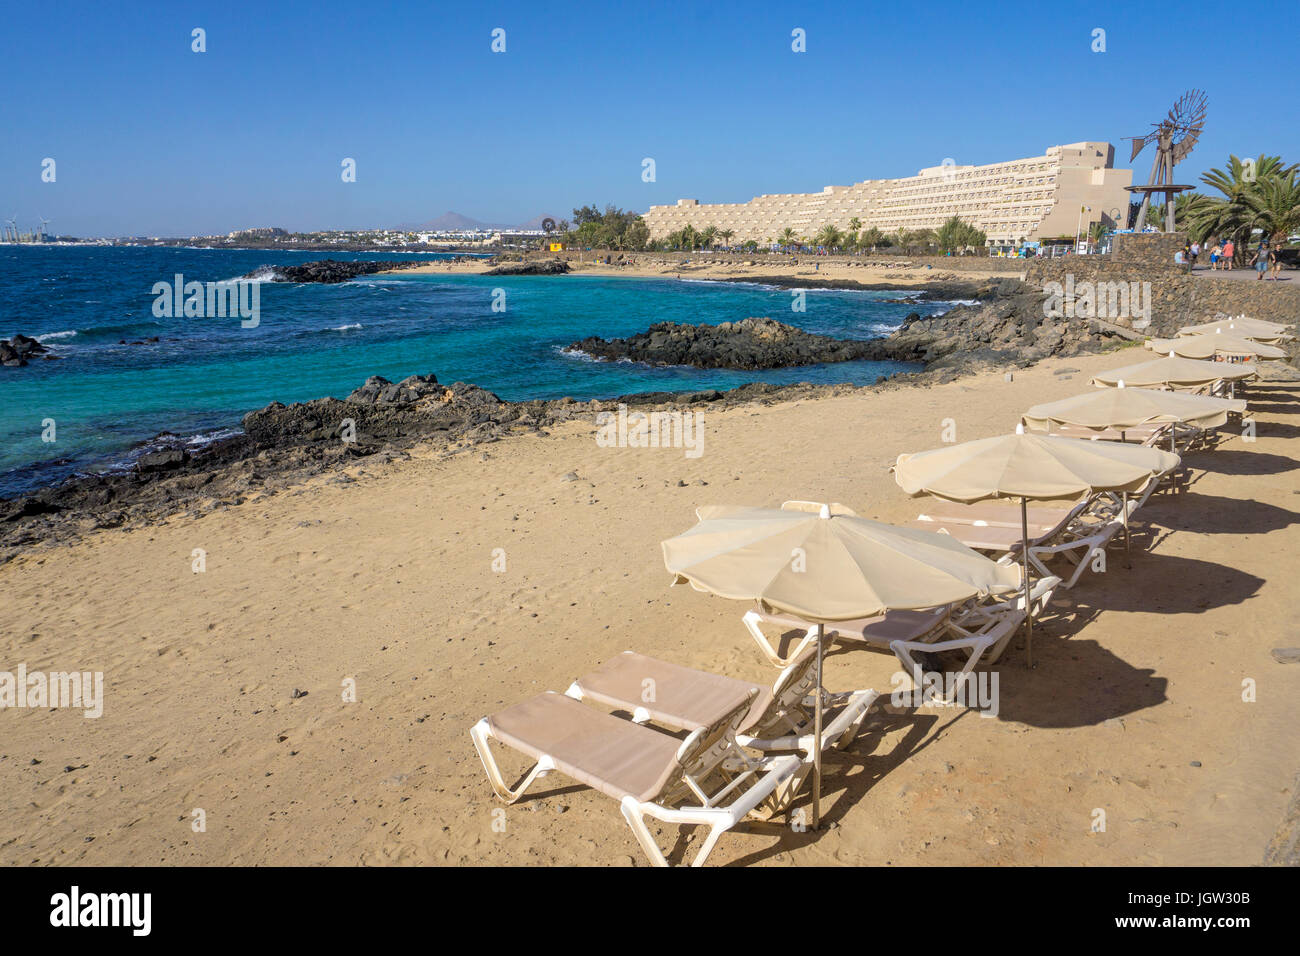 Dem Strand Playa del Jablillo beim Hotel Grand Teguise Playa, Costa Teguise, Lanzarote, Kanarische Inseln, Europa | Playa del Jablillo, Strand am Hotel Stockfoto